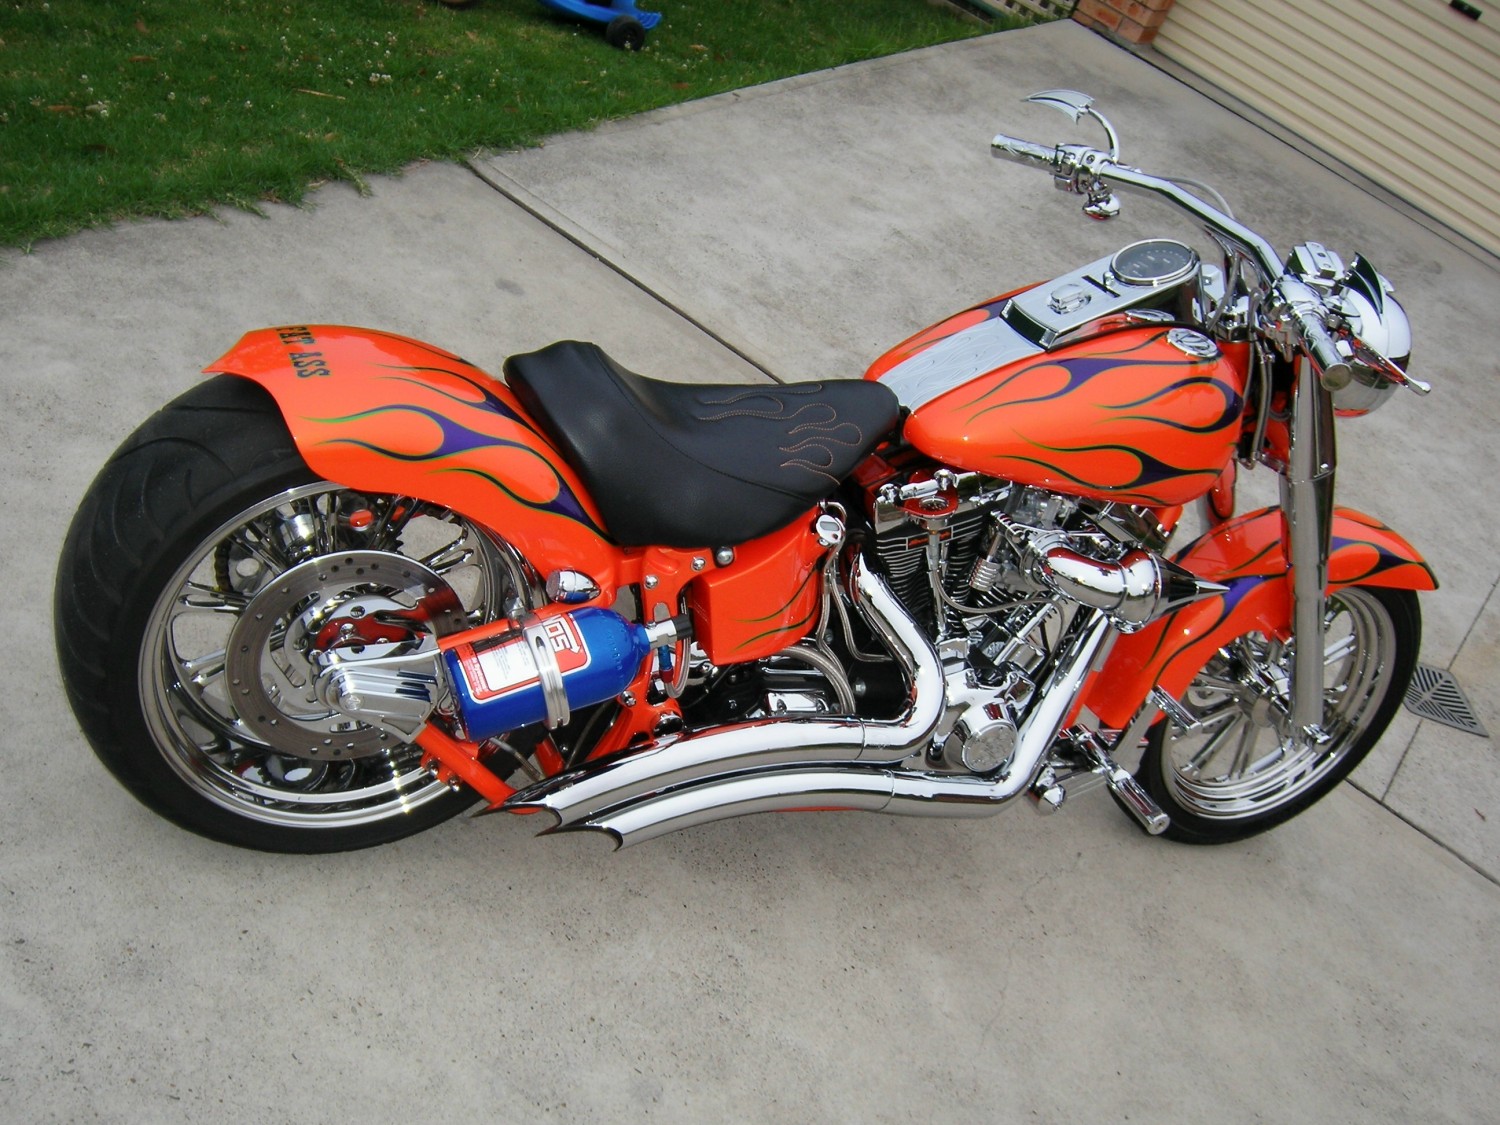 2002 Harley-Davidson fatboy